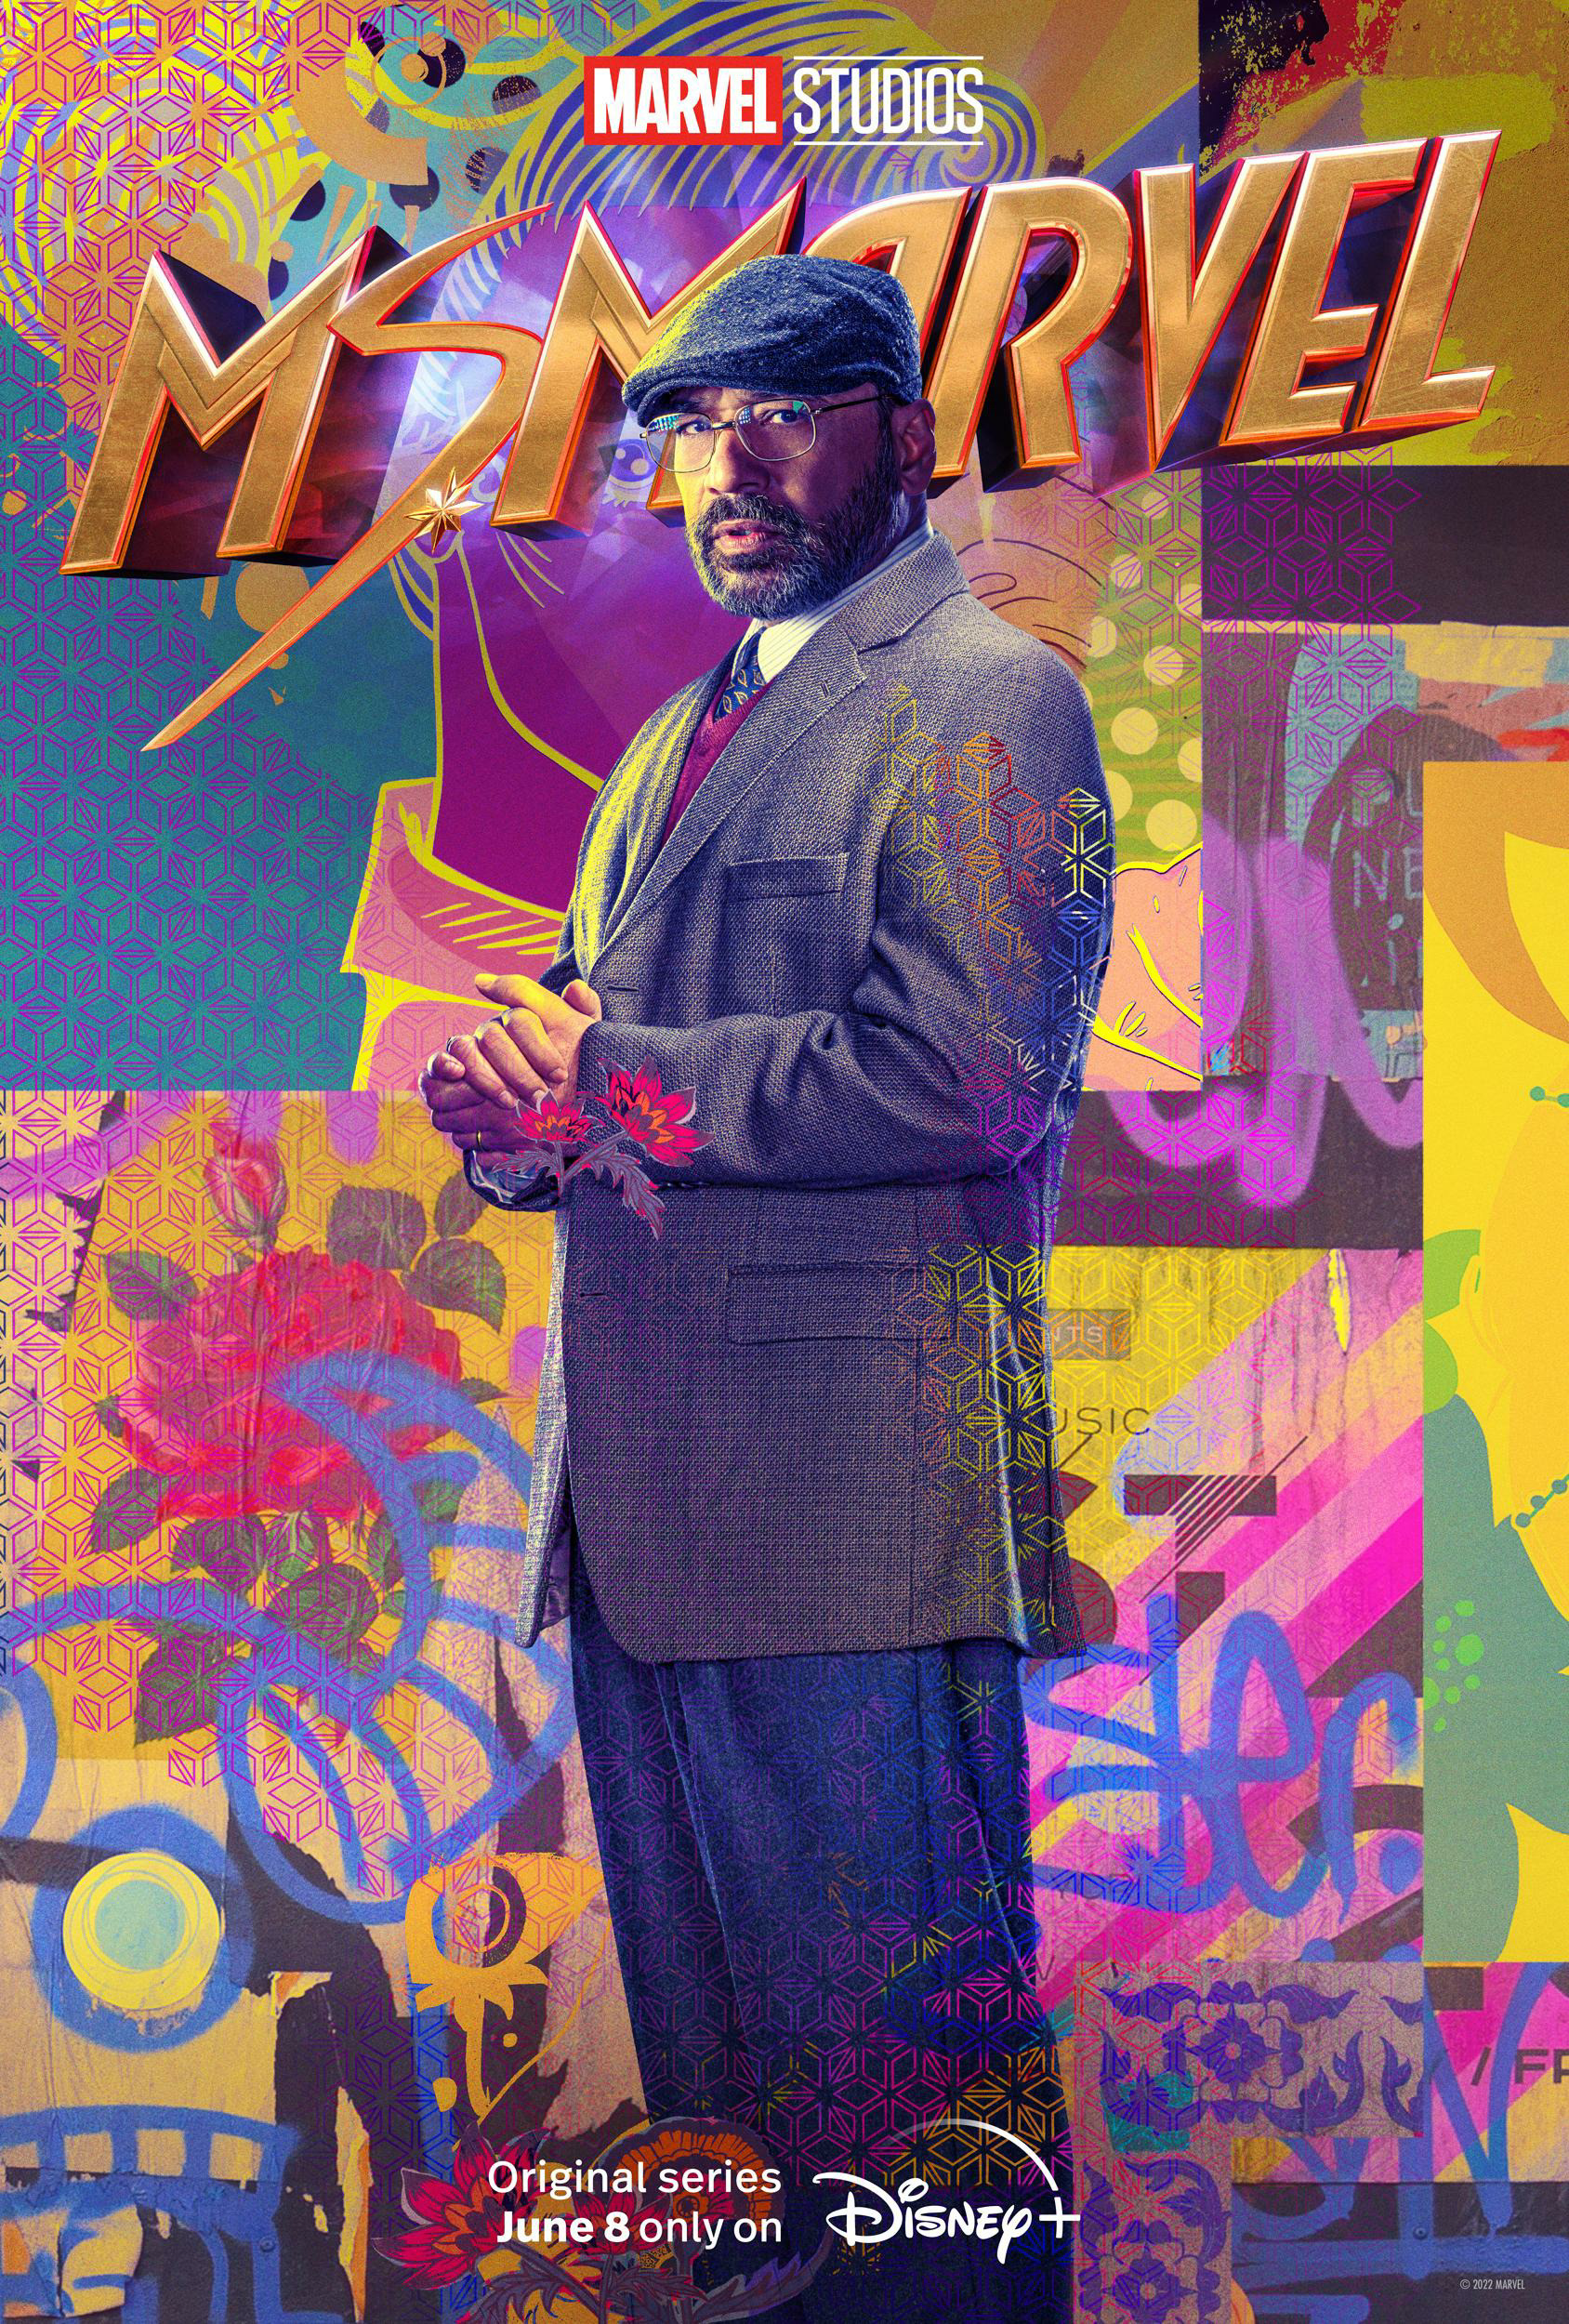 Mega Sized TV Poster Image for Ms. Marvel (#12 of 12)